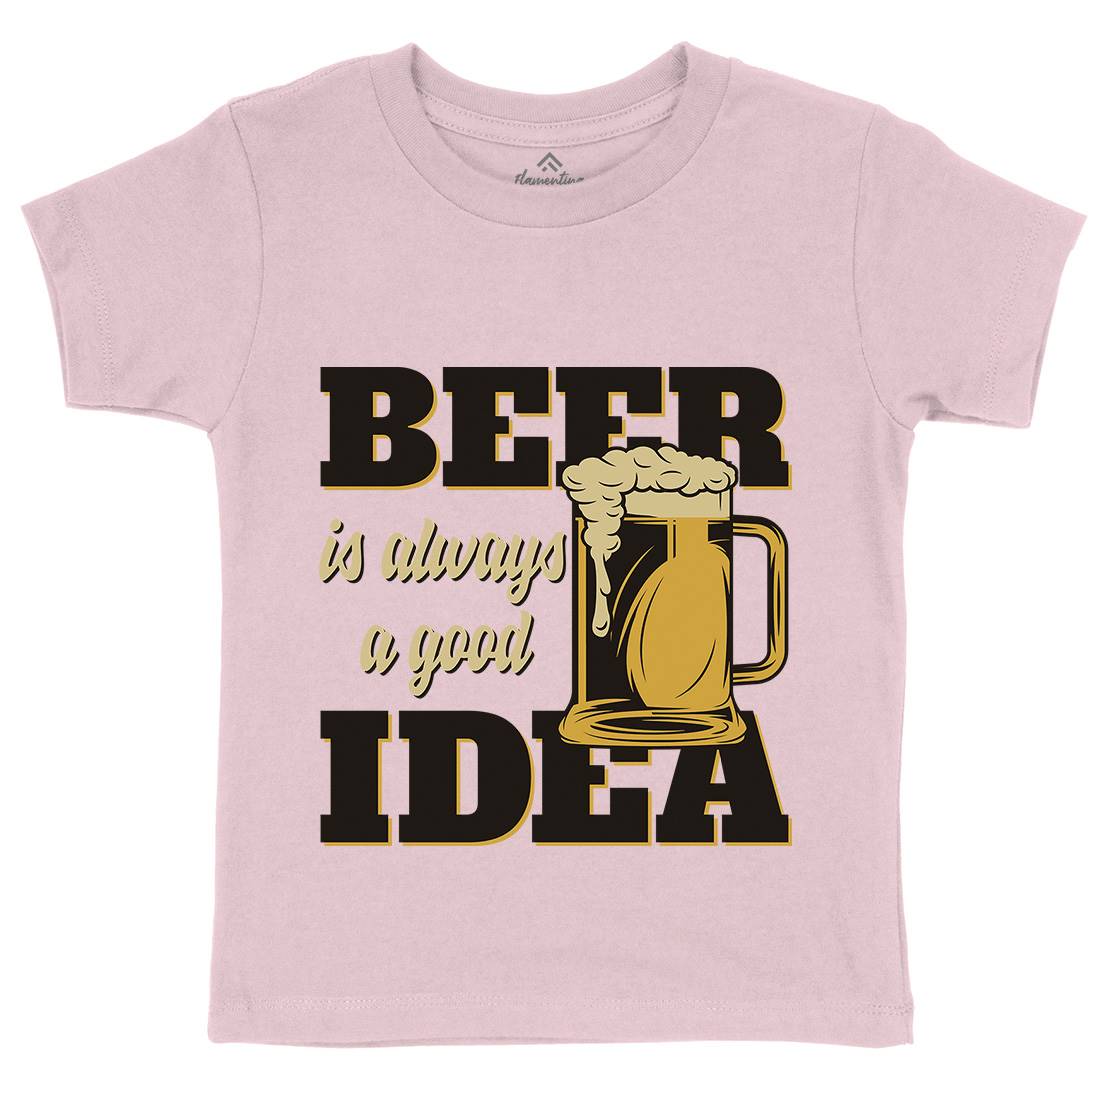 Beer Good Idea Kids Crew Neck T-Shirt Drinks B288